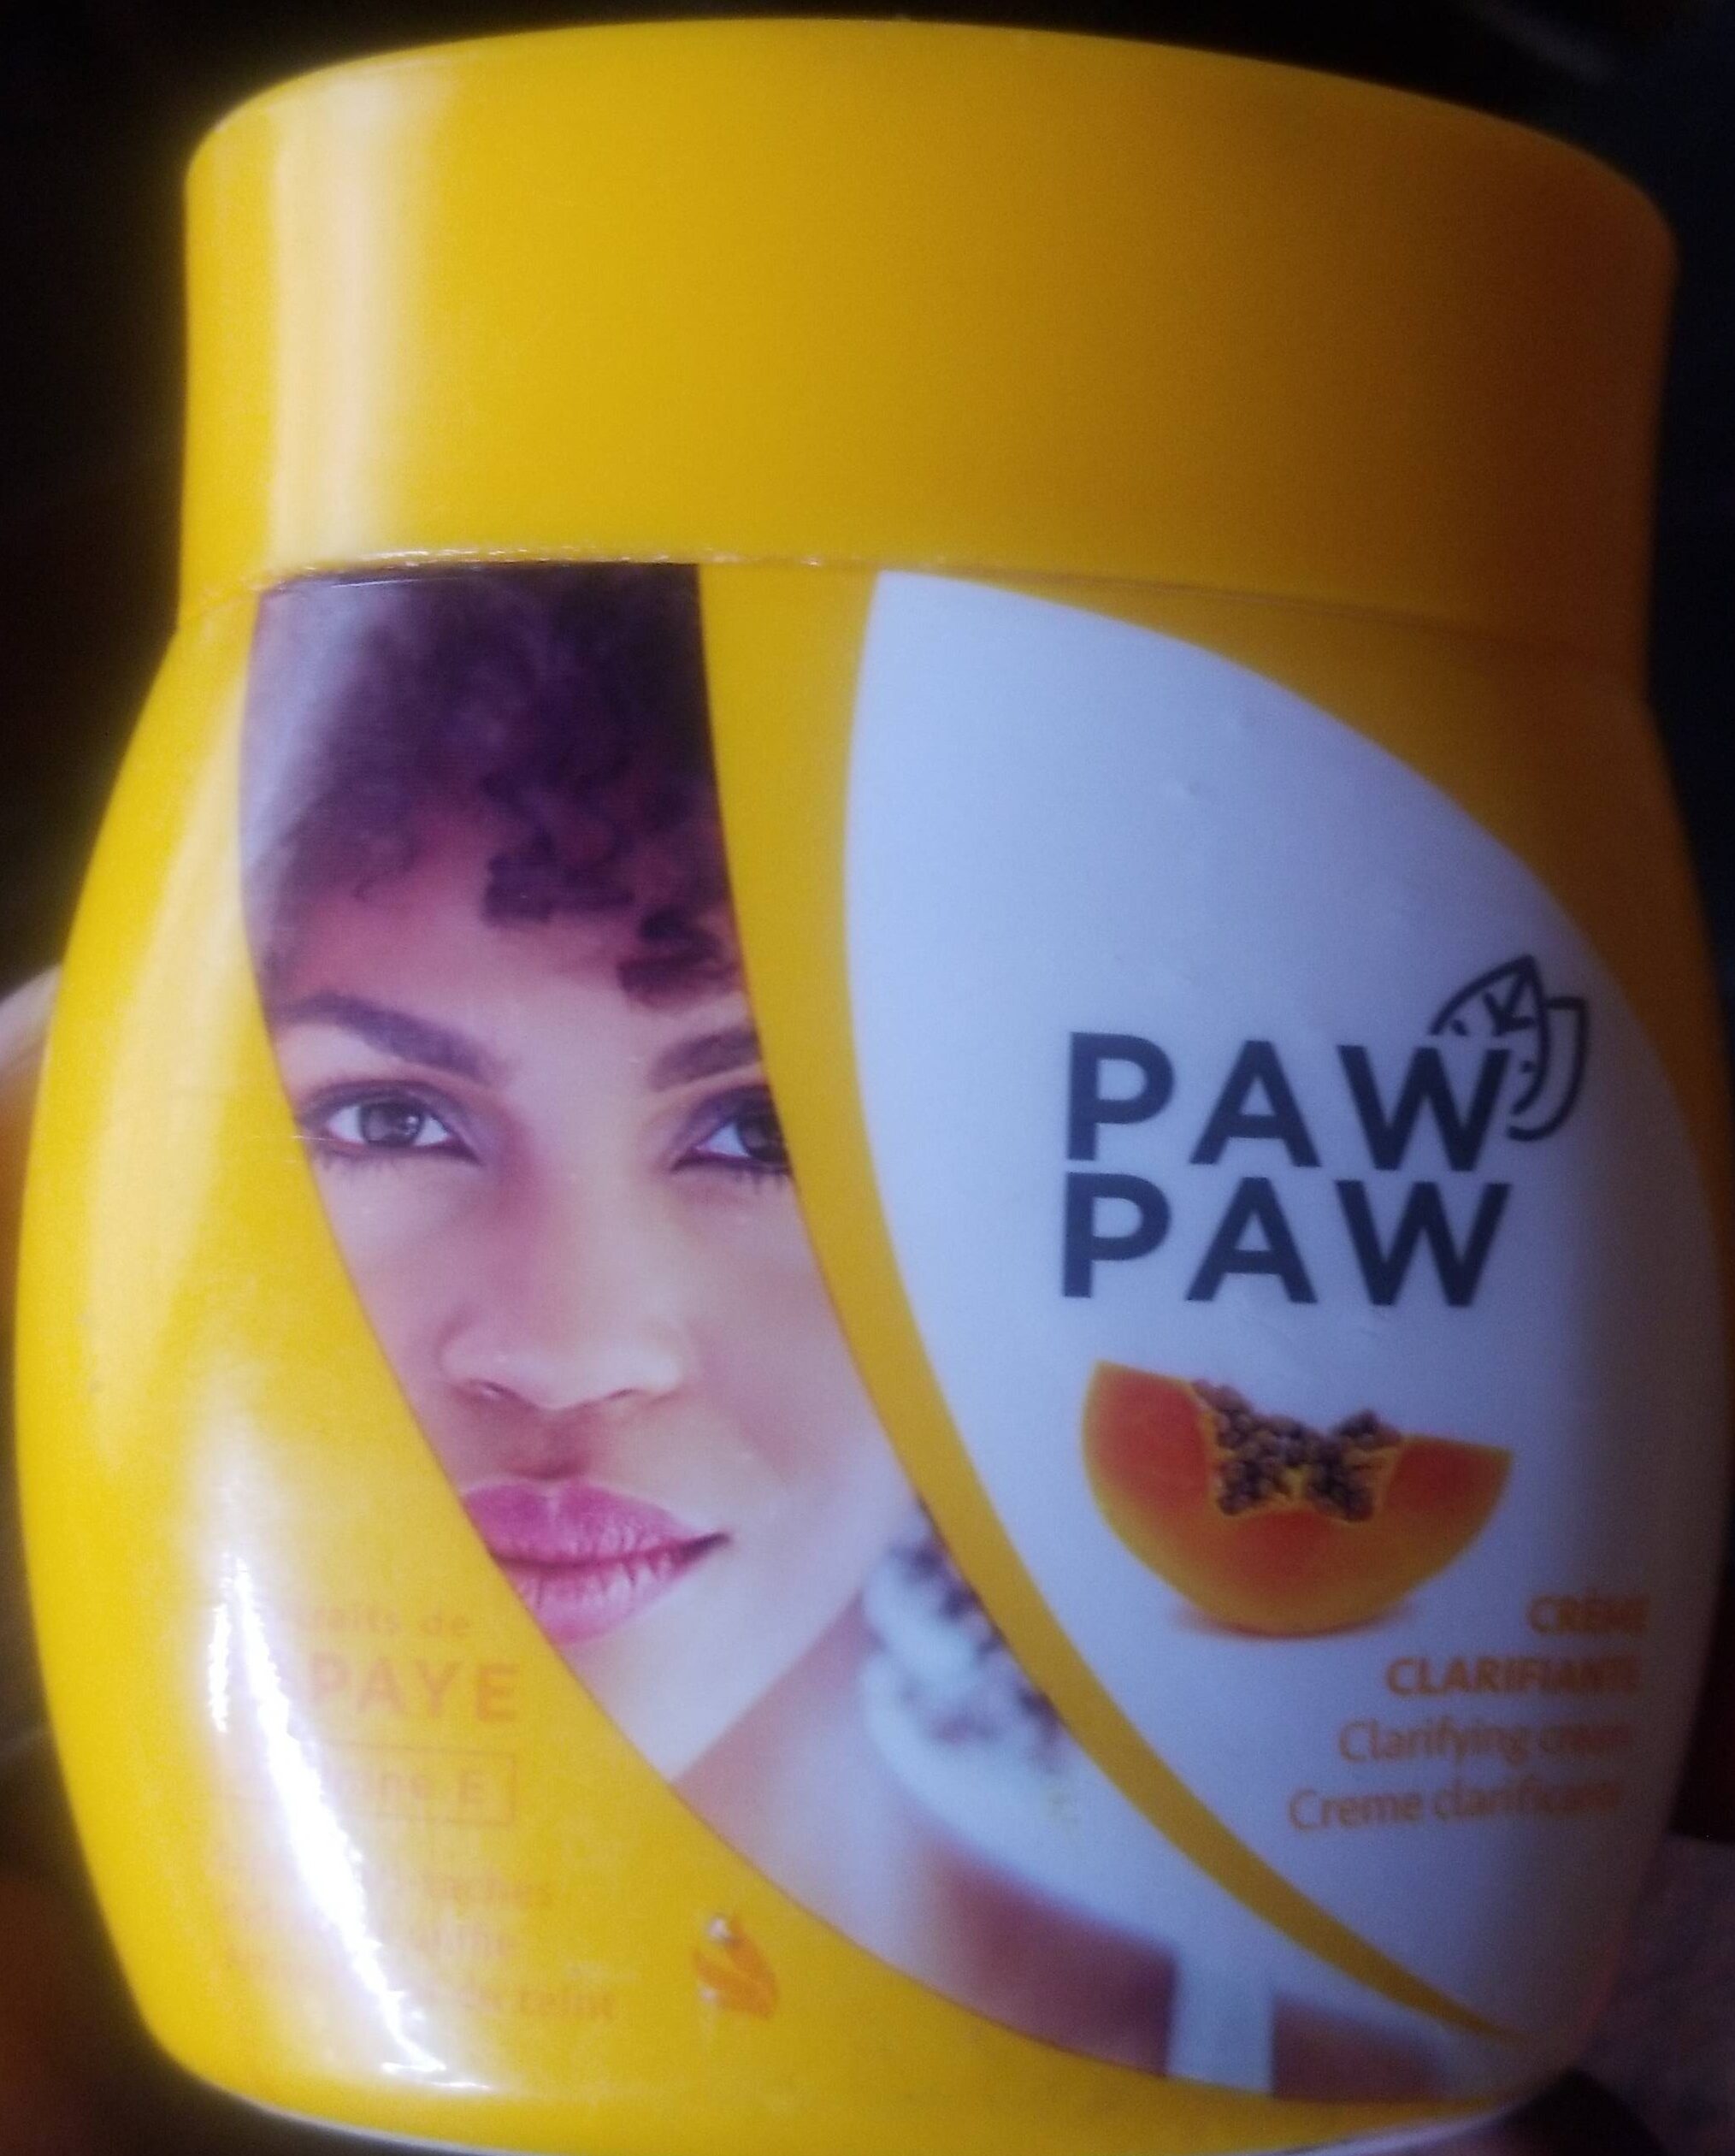 Paw paw - Продукт - en